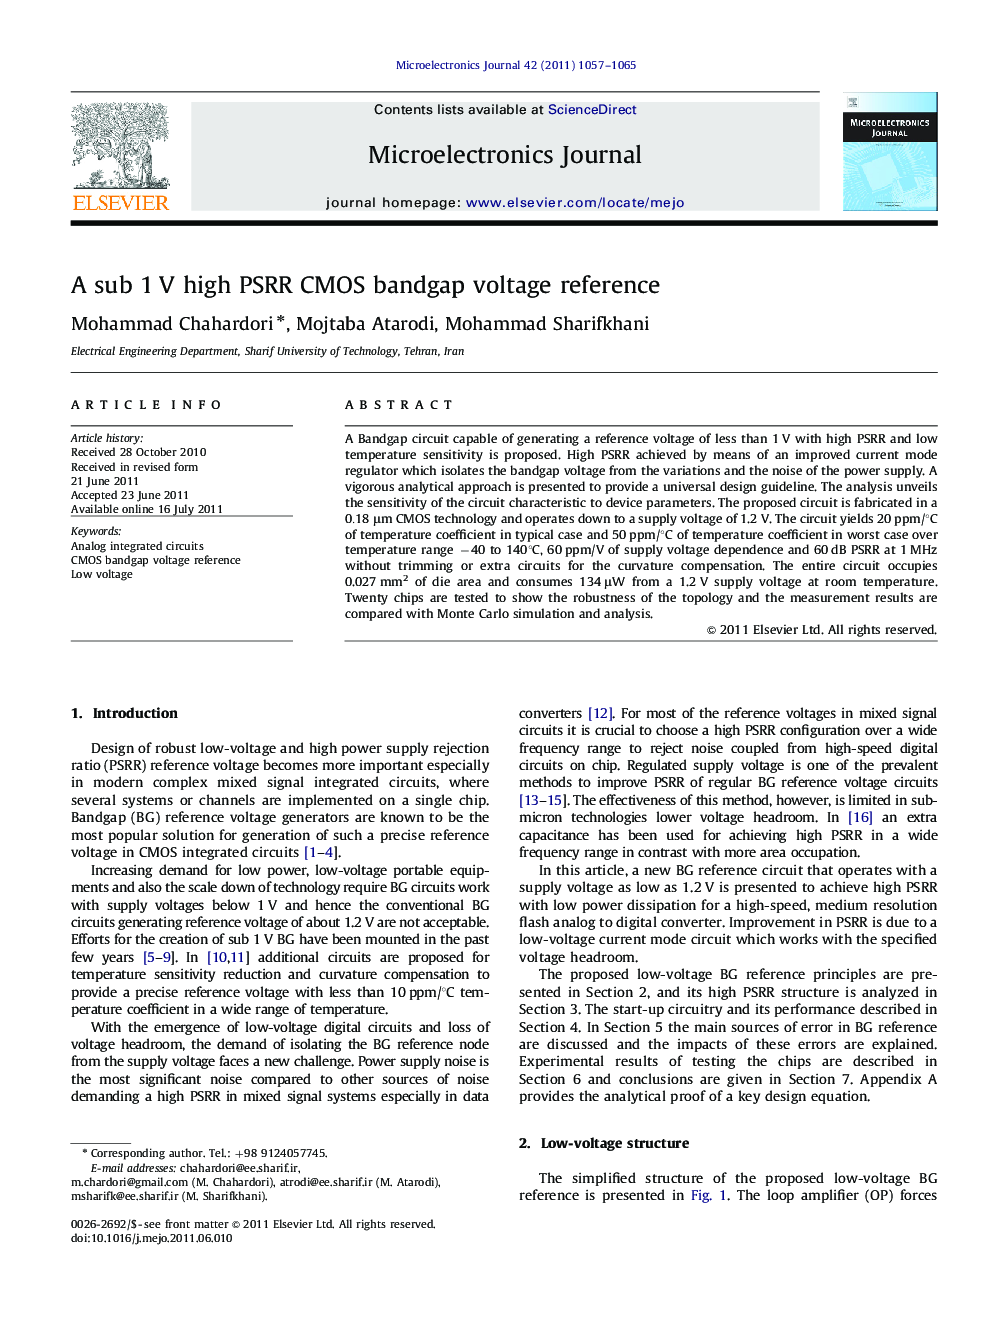 A sub 1 V high PSRR CMOS bandgap voltage reference